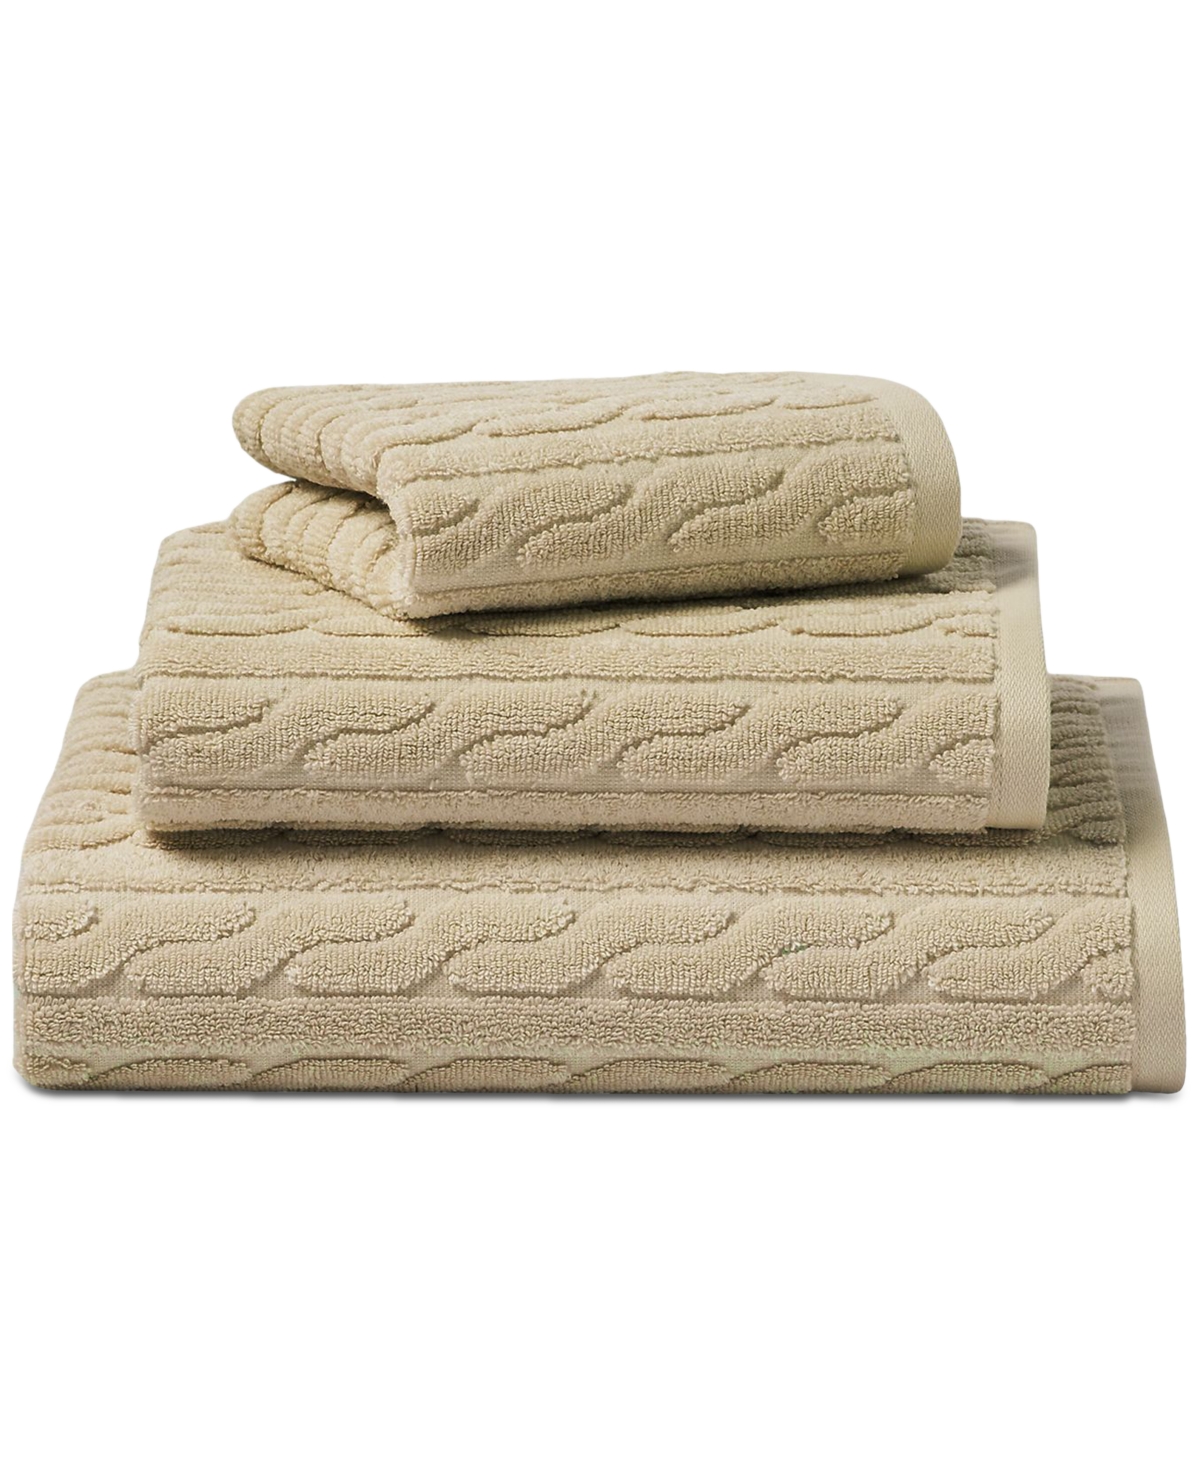  Ralph Lauren Sanders Towel 6 Piece Set Club Navy - 2 Bath Towels,  2 Hand Towels, 2 Washcloths : Home & Kitchen